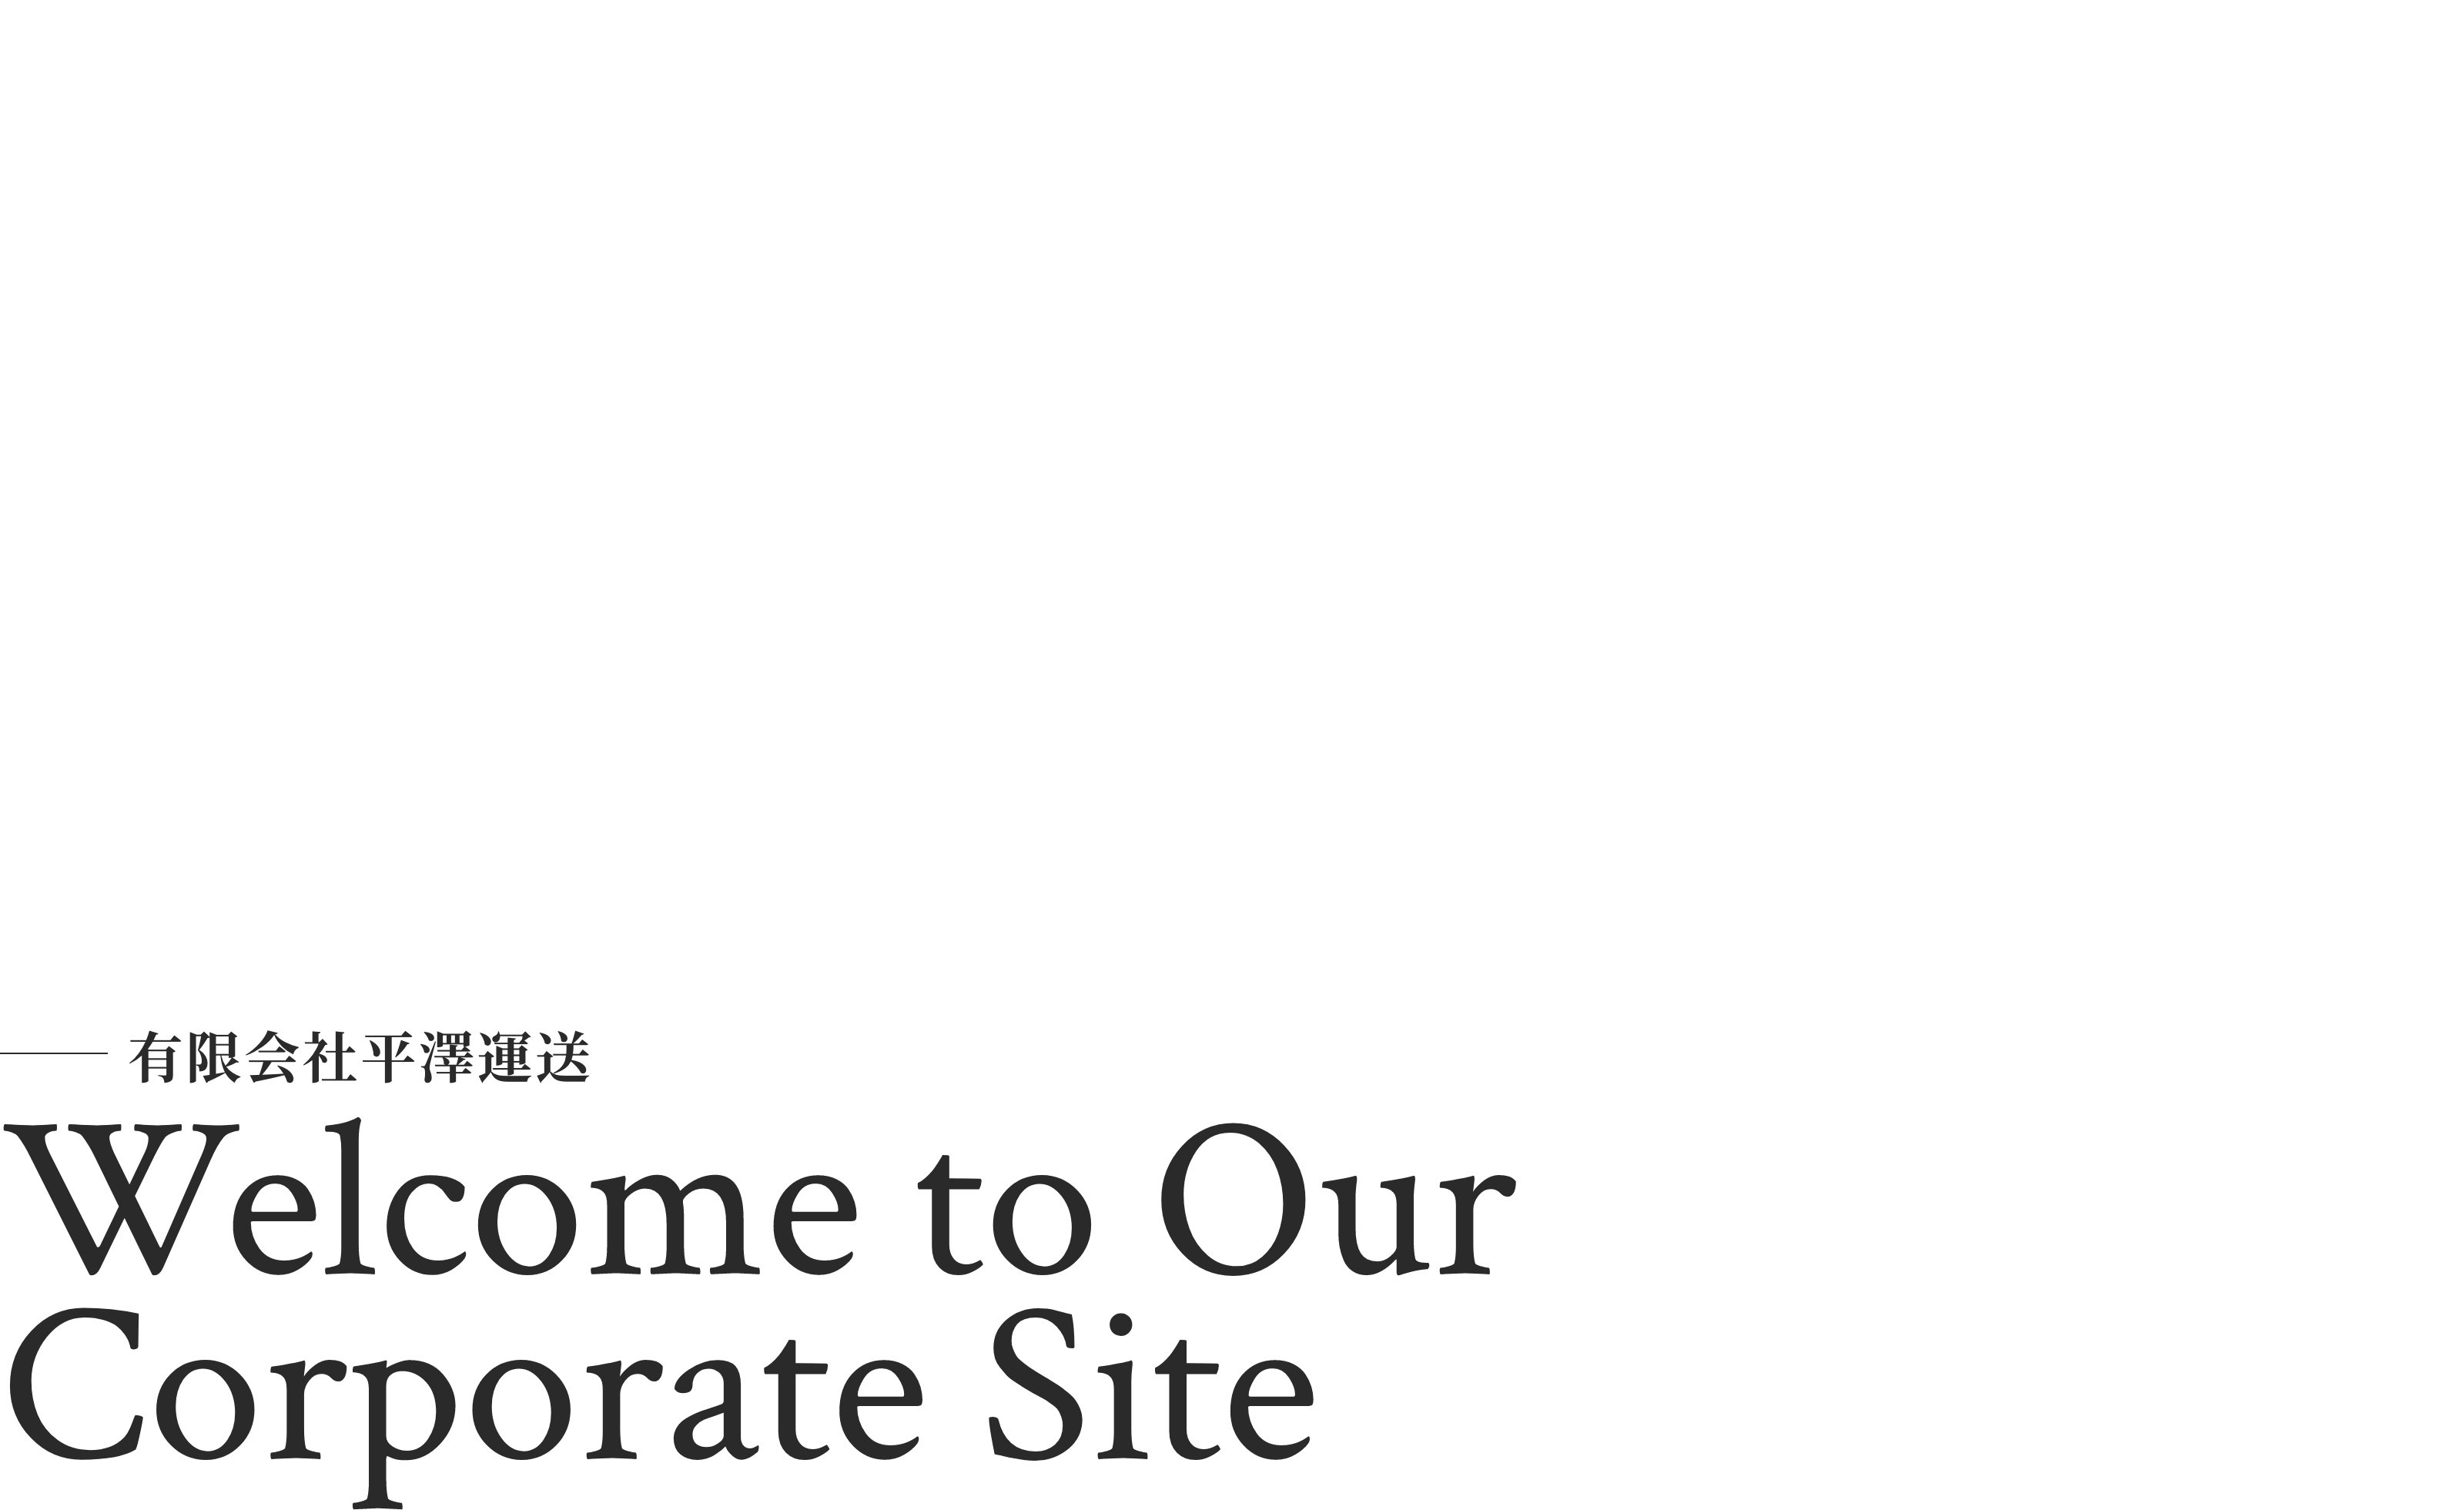 有限会社平澤運送 Welcome to Our Corporate Site